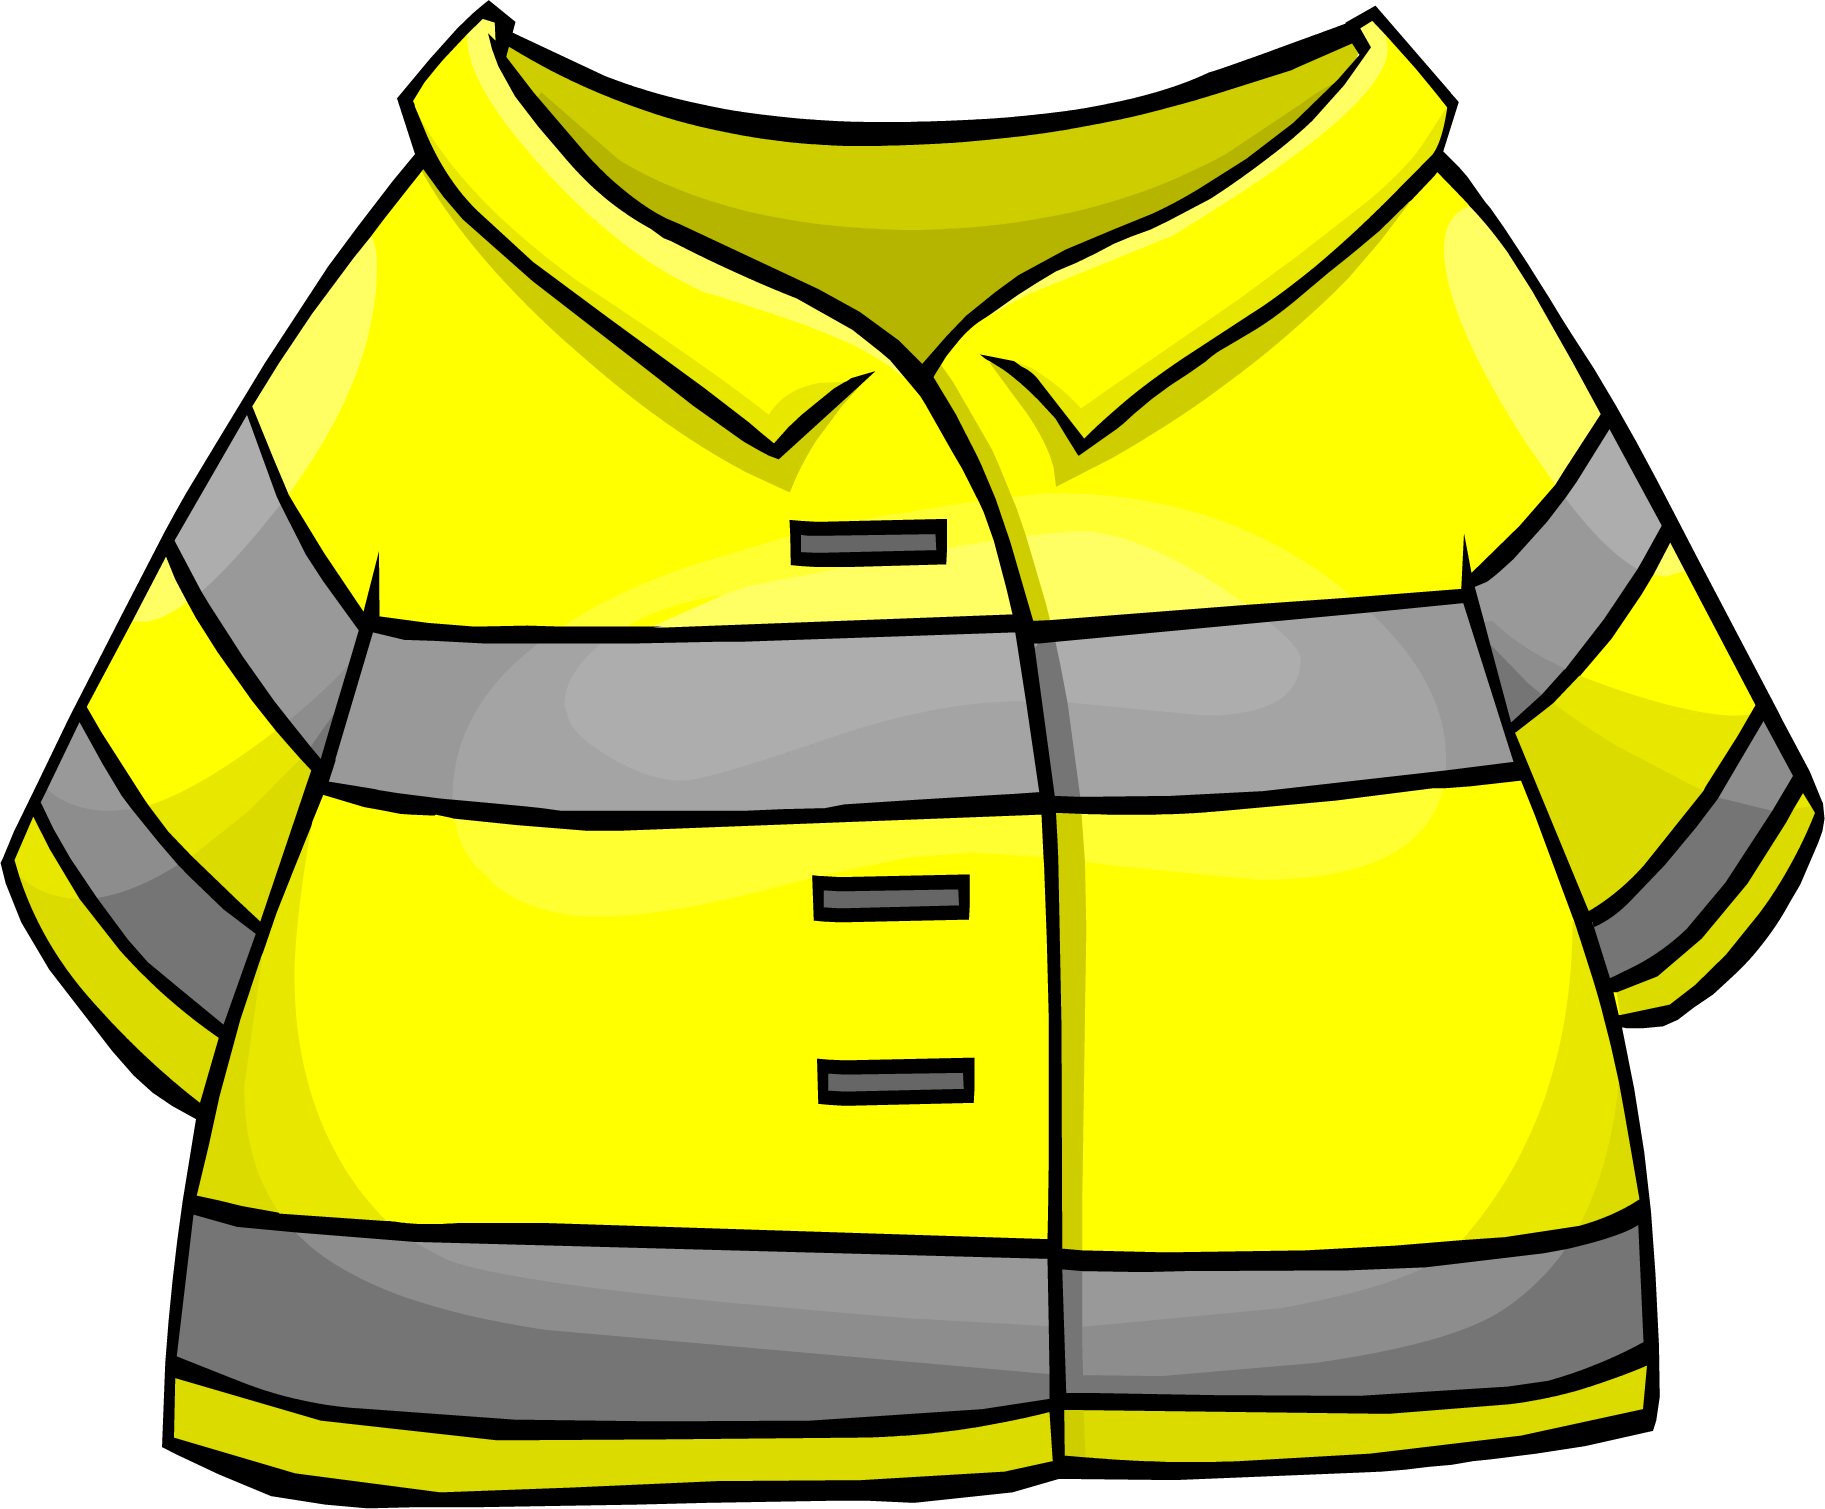 Firefighter Jacket Illustration